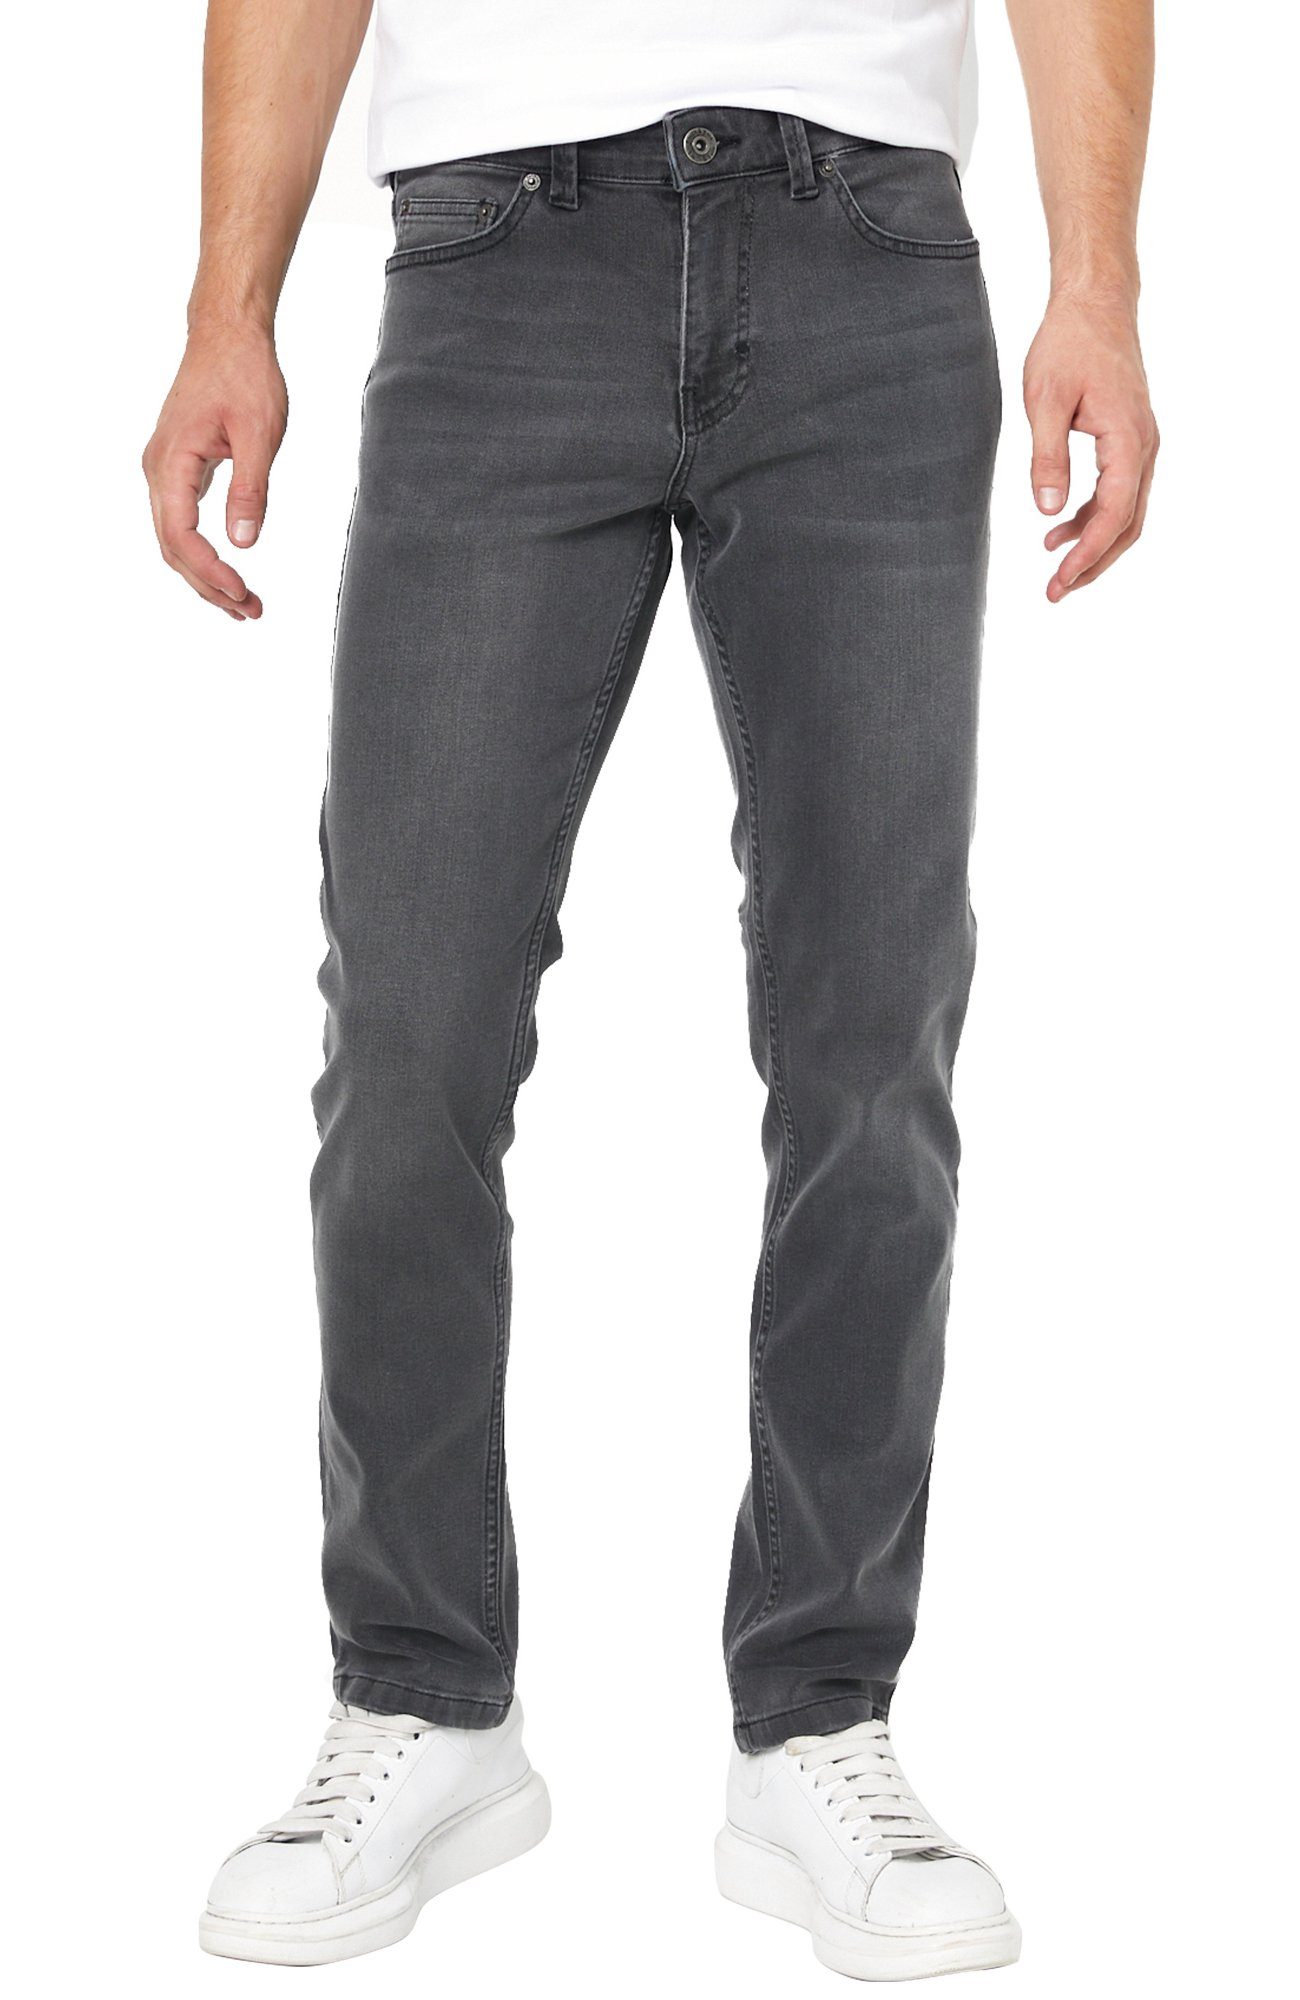 Smith & Solo Slim-fit-Jeans »Jeans Herren - Slim Fit Jeanshose, Hosen  Stretch Modern Männer Straight Hose Cut Basic Washed« 5-Pocket Design,  Slimfit, Grau online kaufen | OTTO